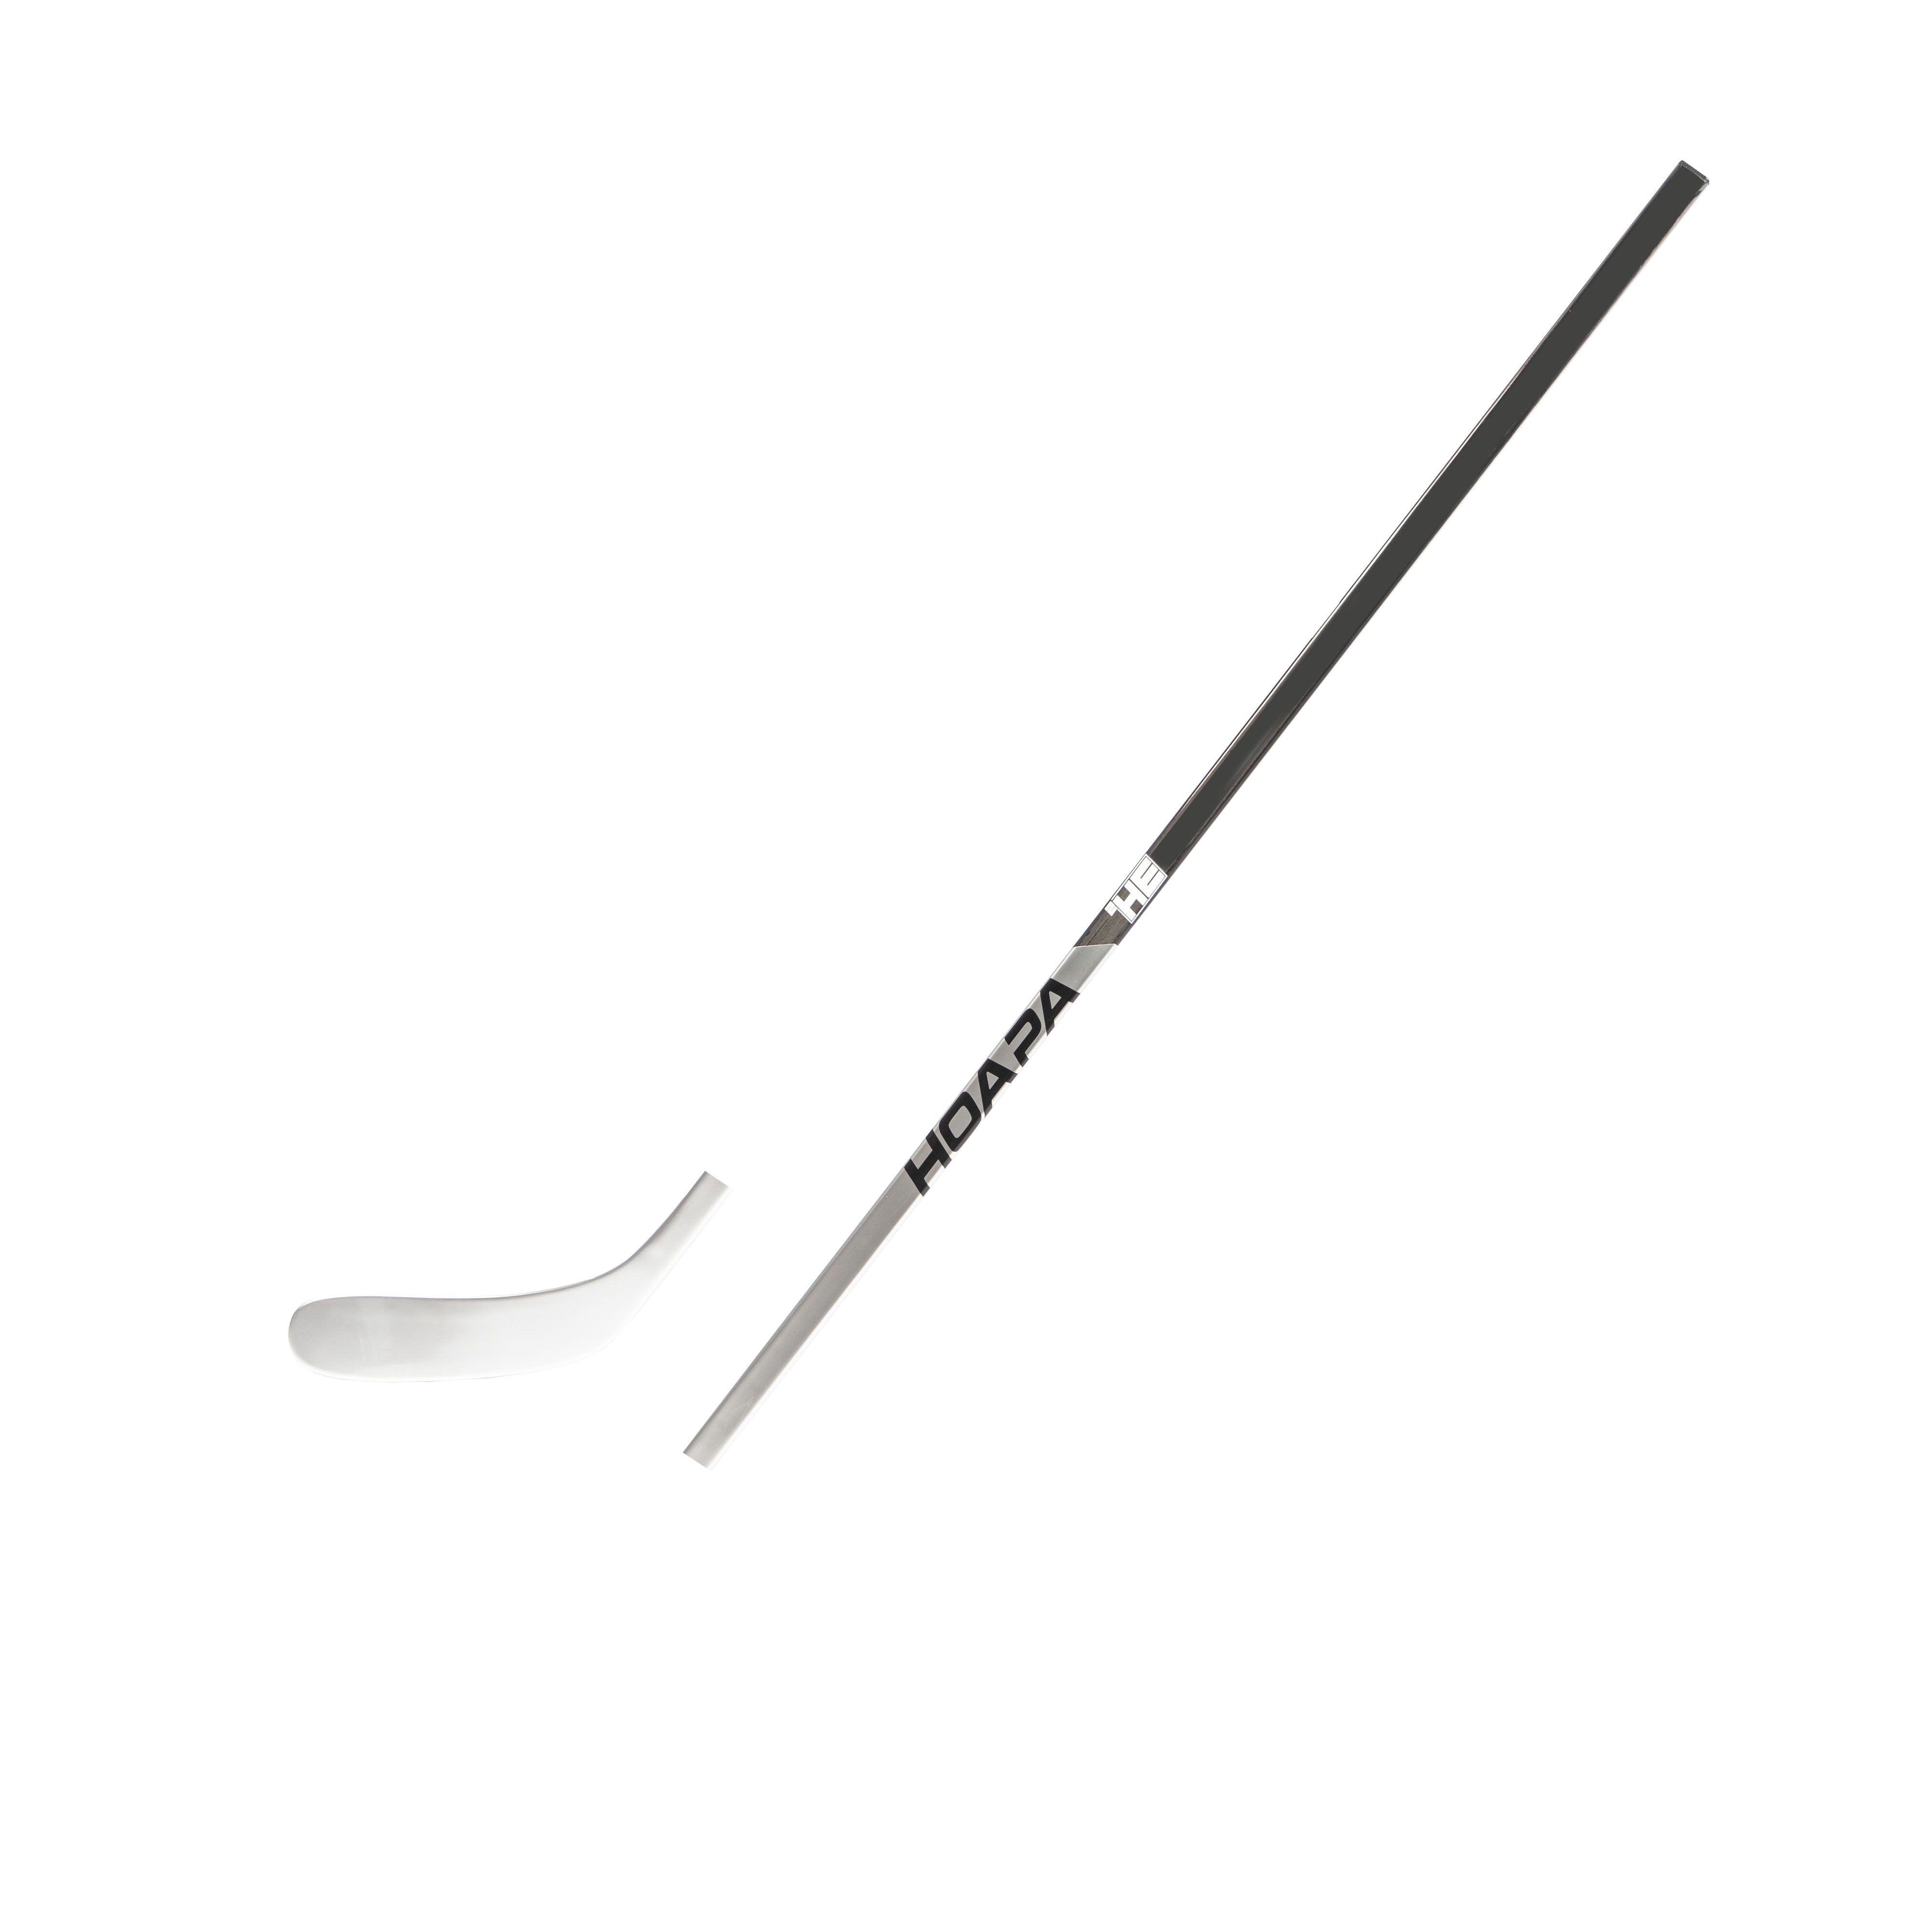 Brown Carbon Alfa Viva Hockey Stick, For Hokey, Size: 2 Feet